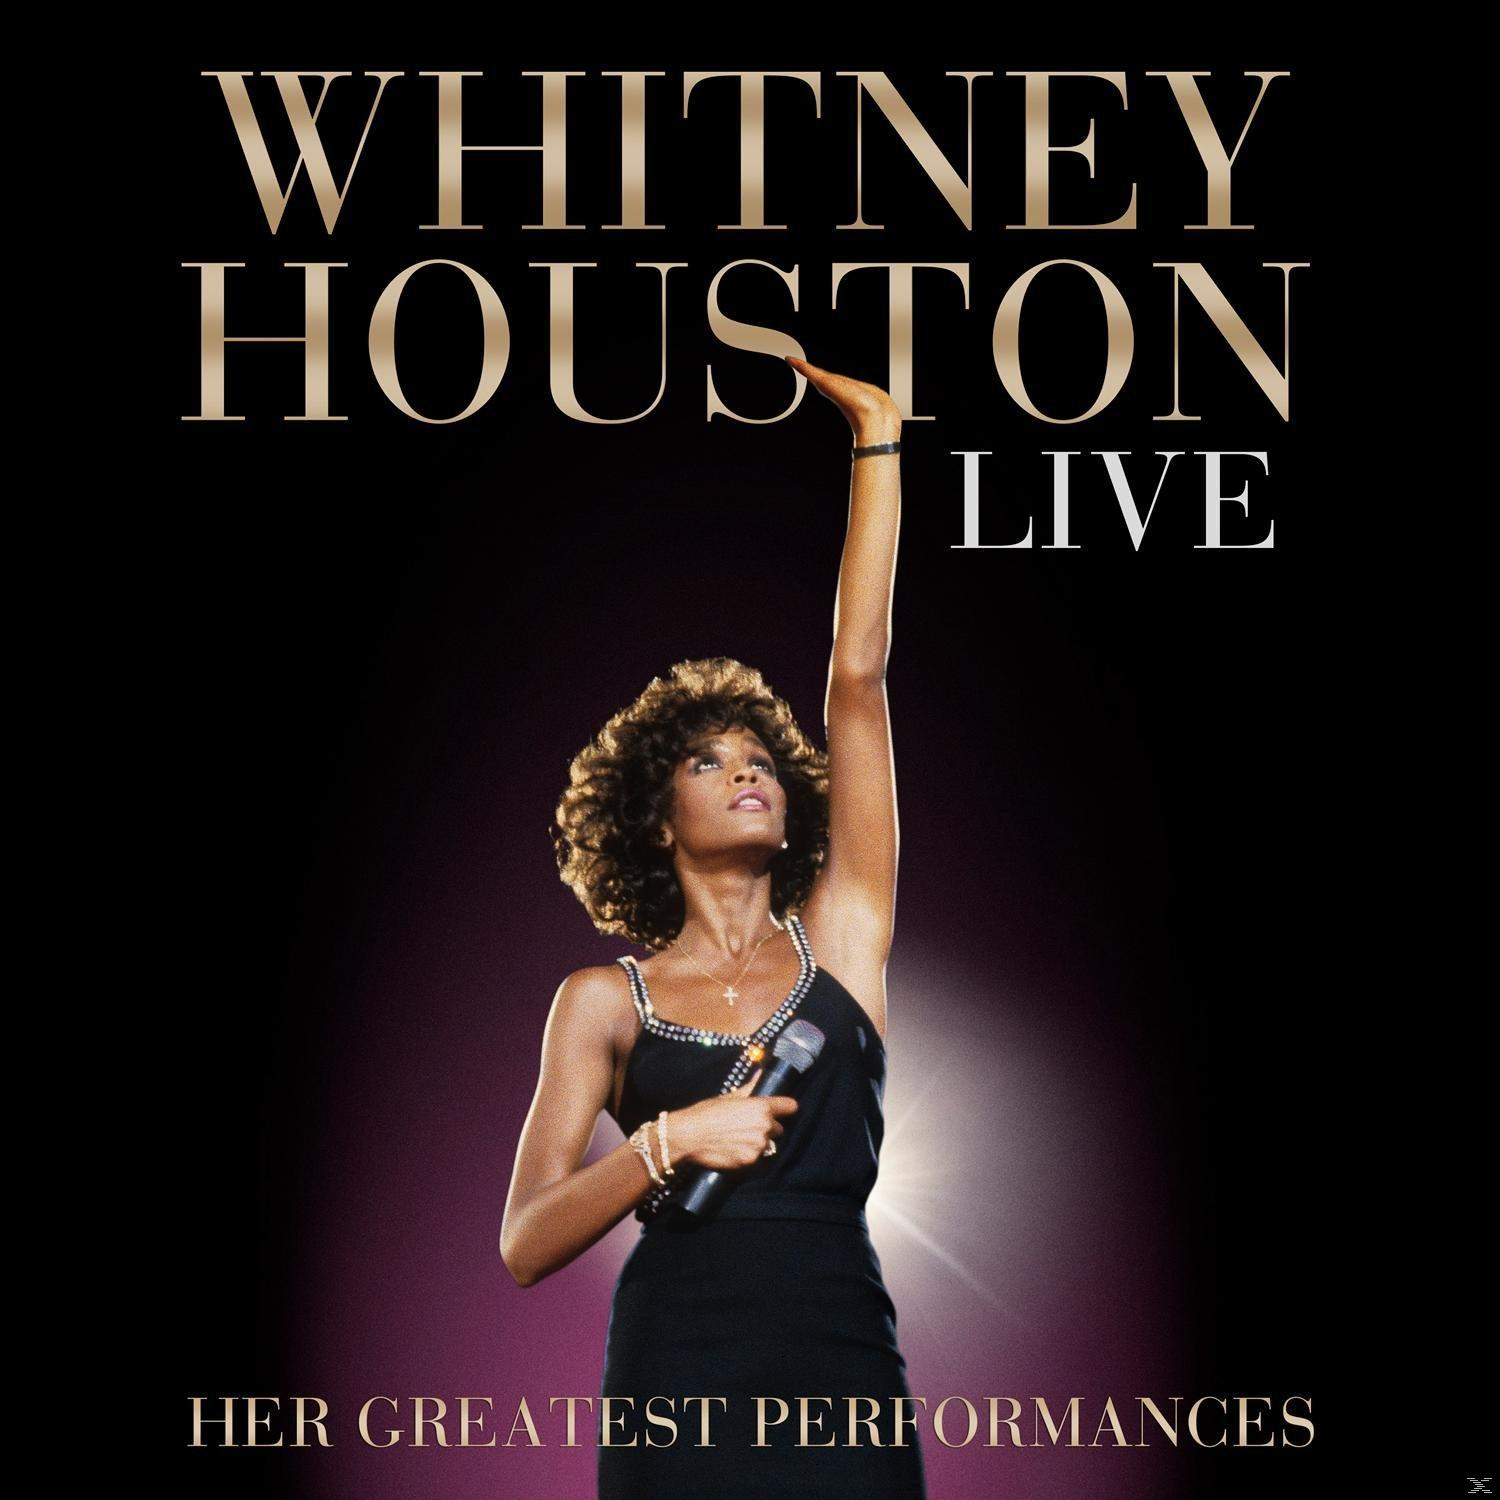 - Whitney Greatest Her - (CD) Houston Live: Performances